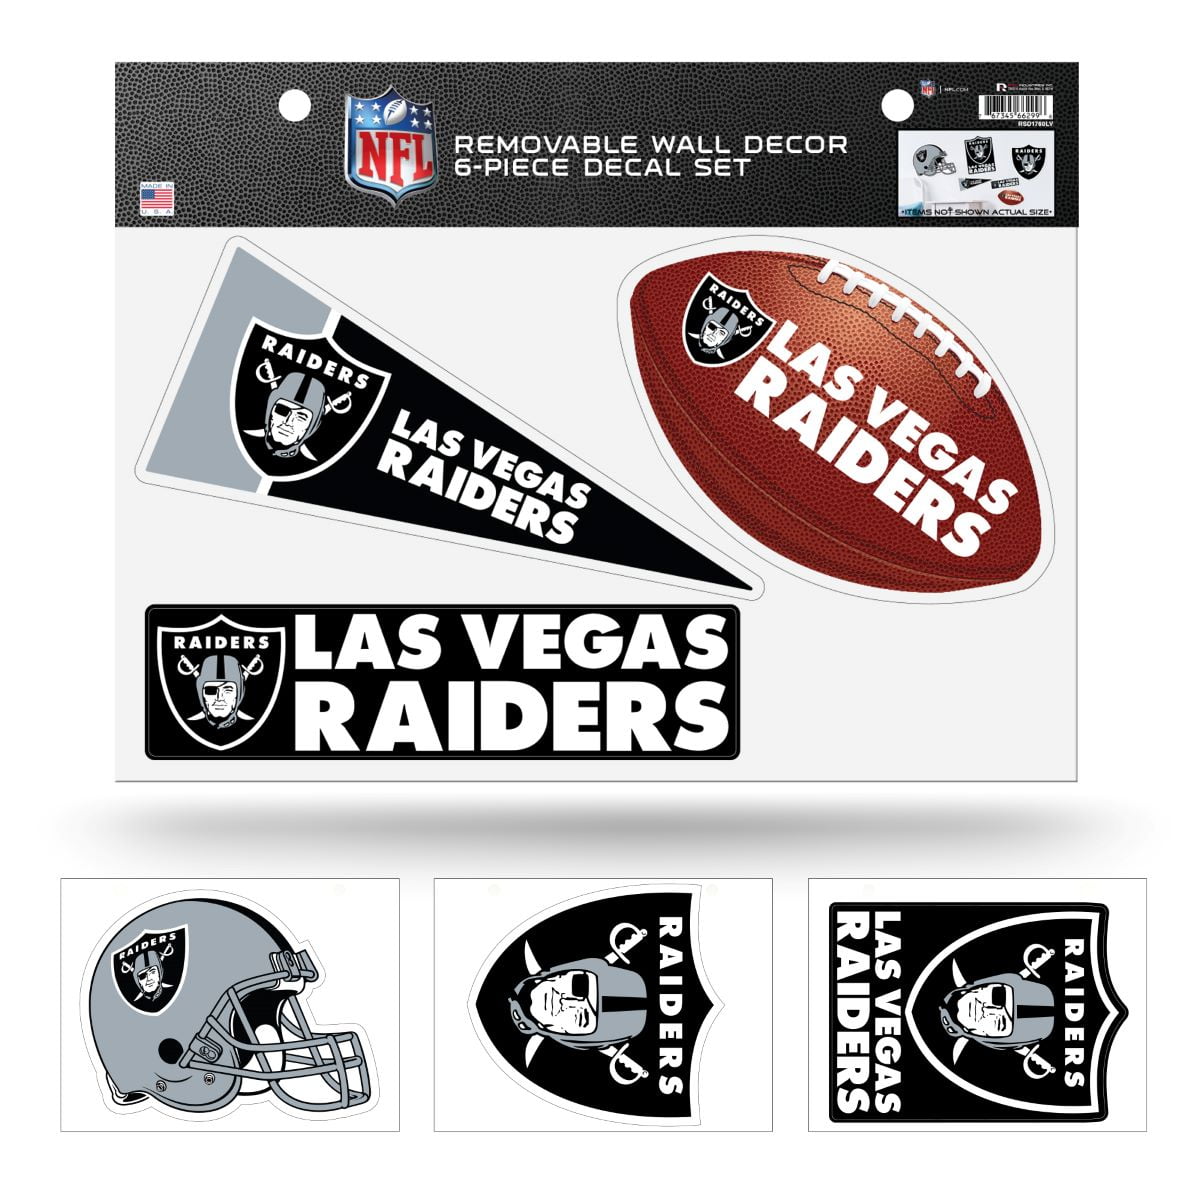 Las Vegas Raiders Circle Logo Vinyl Decal / Sticker 5 sizes!!